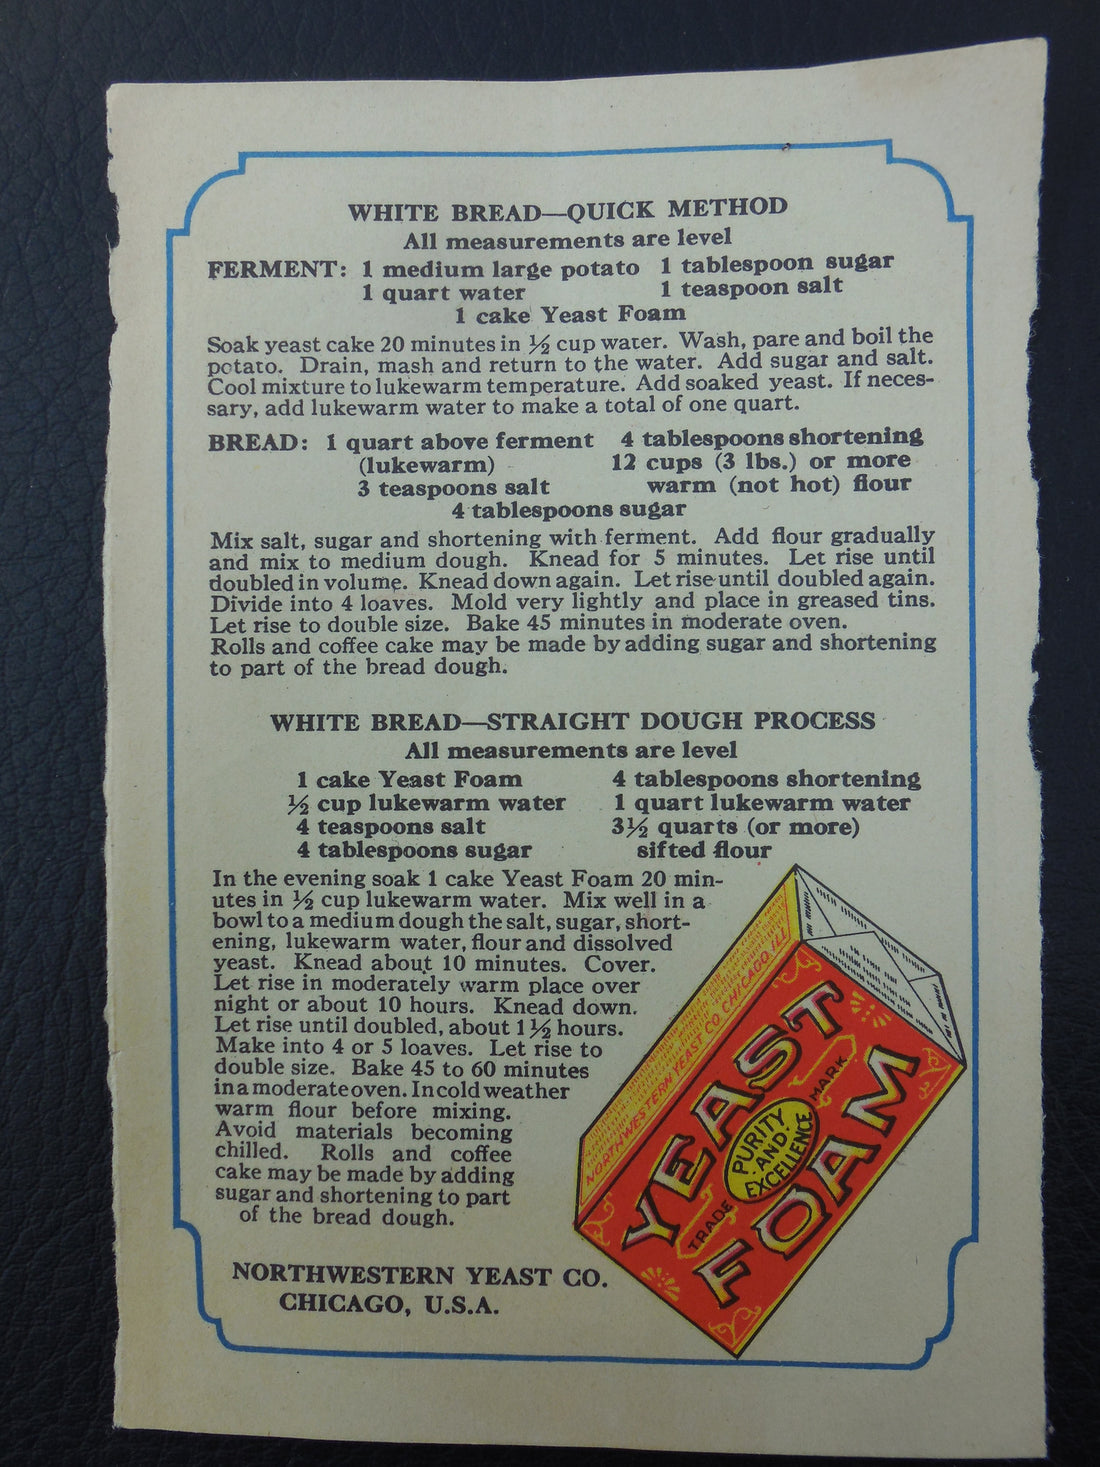 1930s Yeast Foam White Bread Recipes Baking Instructions - Northwestern Yeast Company